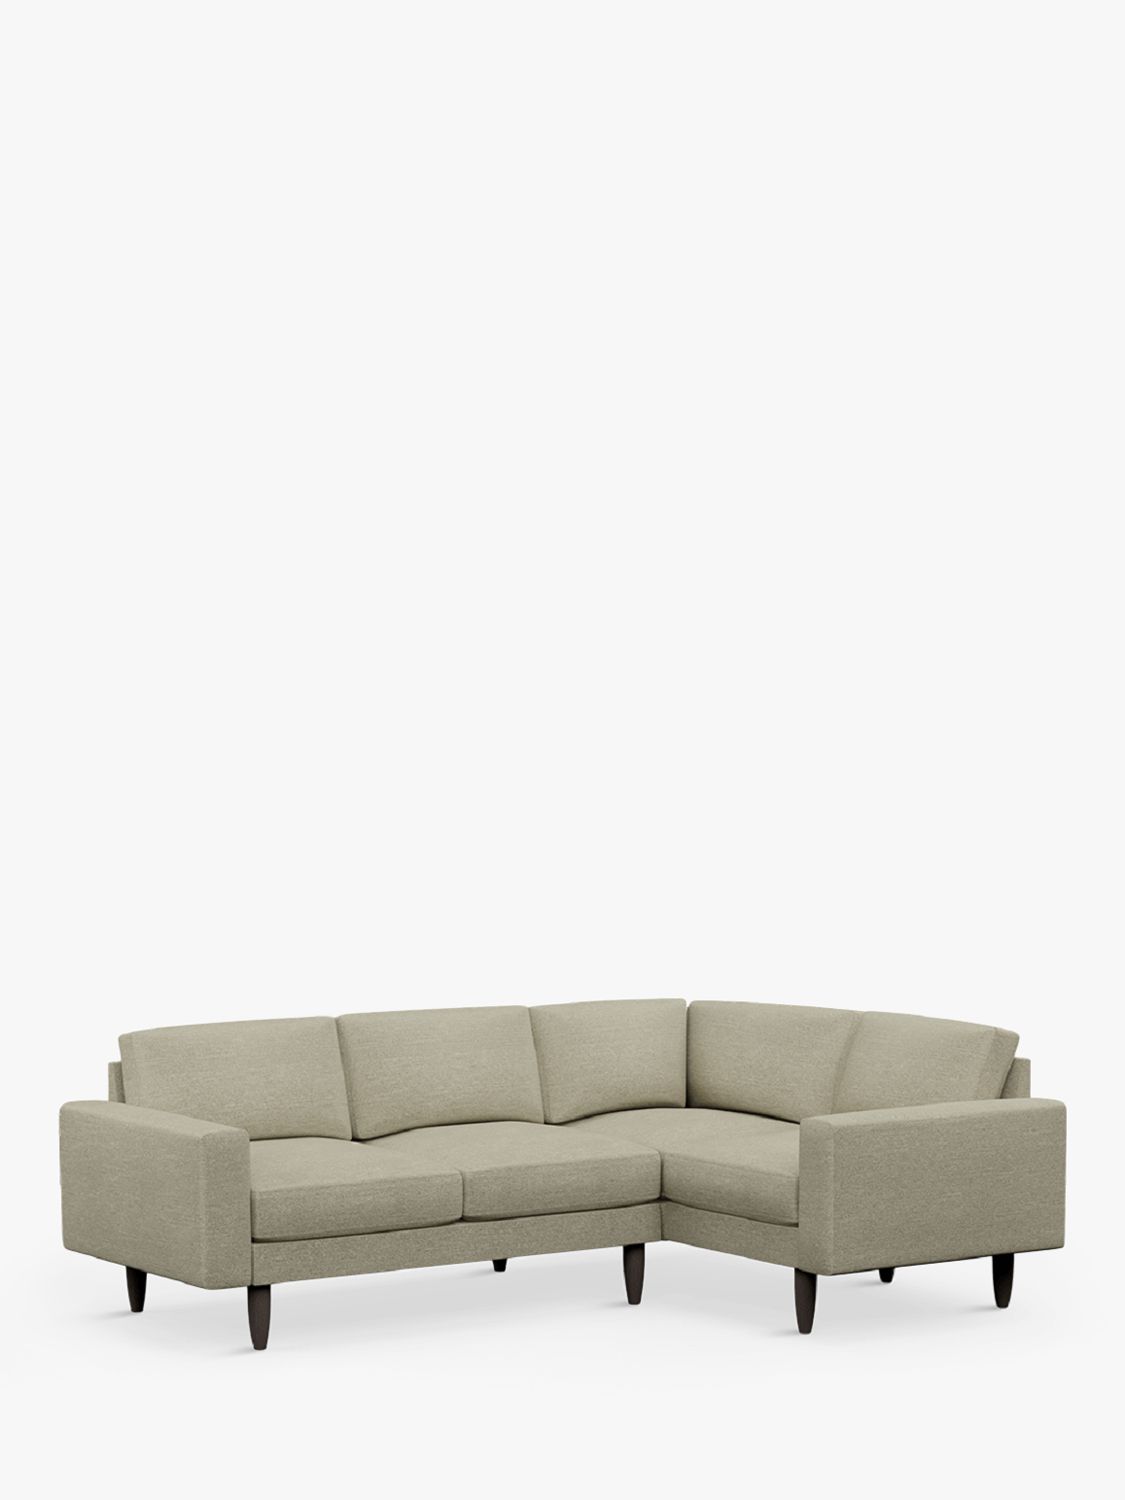 Rise Range, Hutch Rise Block Arm 4 Seater Corner Sofa, Dark Leg, Textured Weave Oatmeal